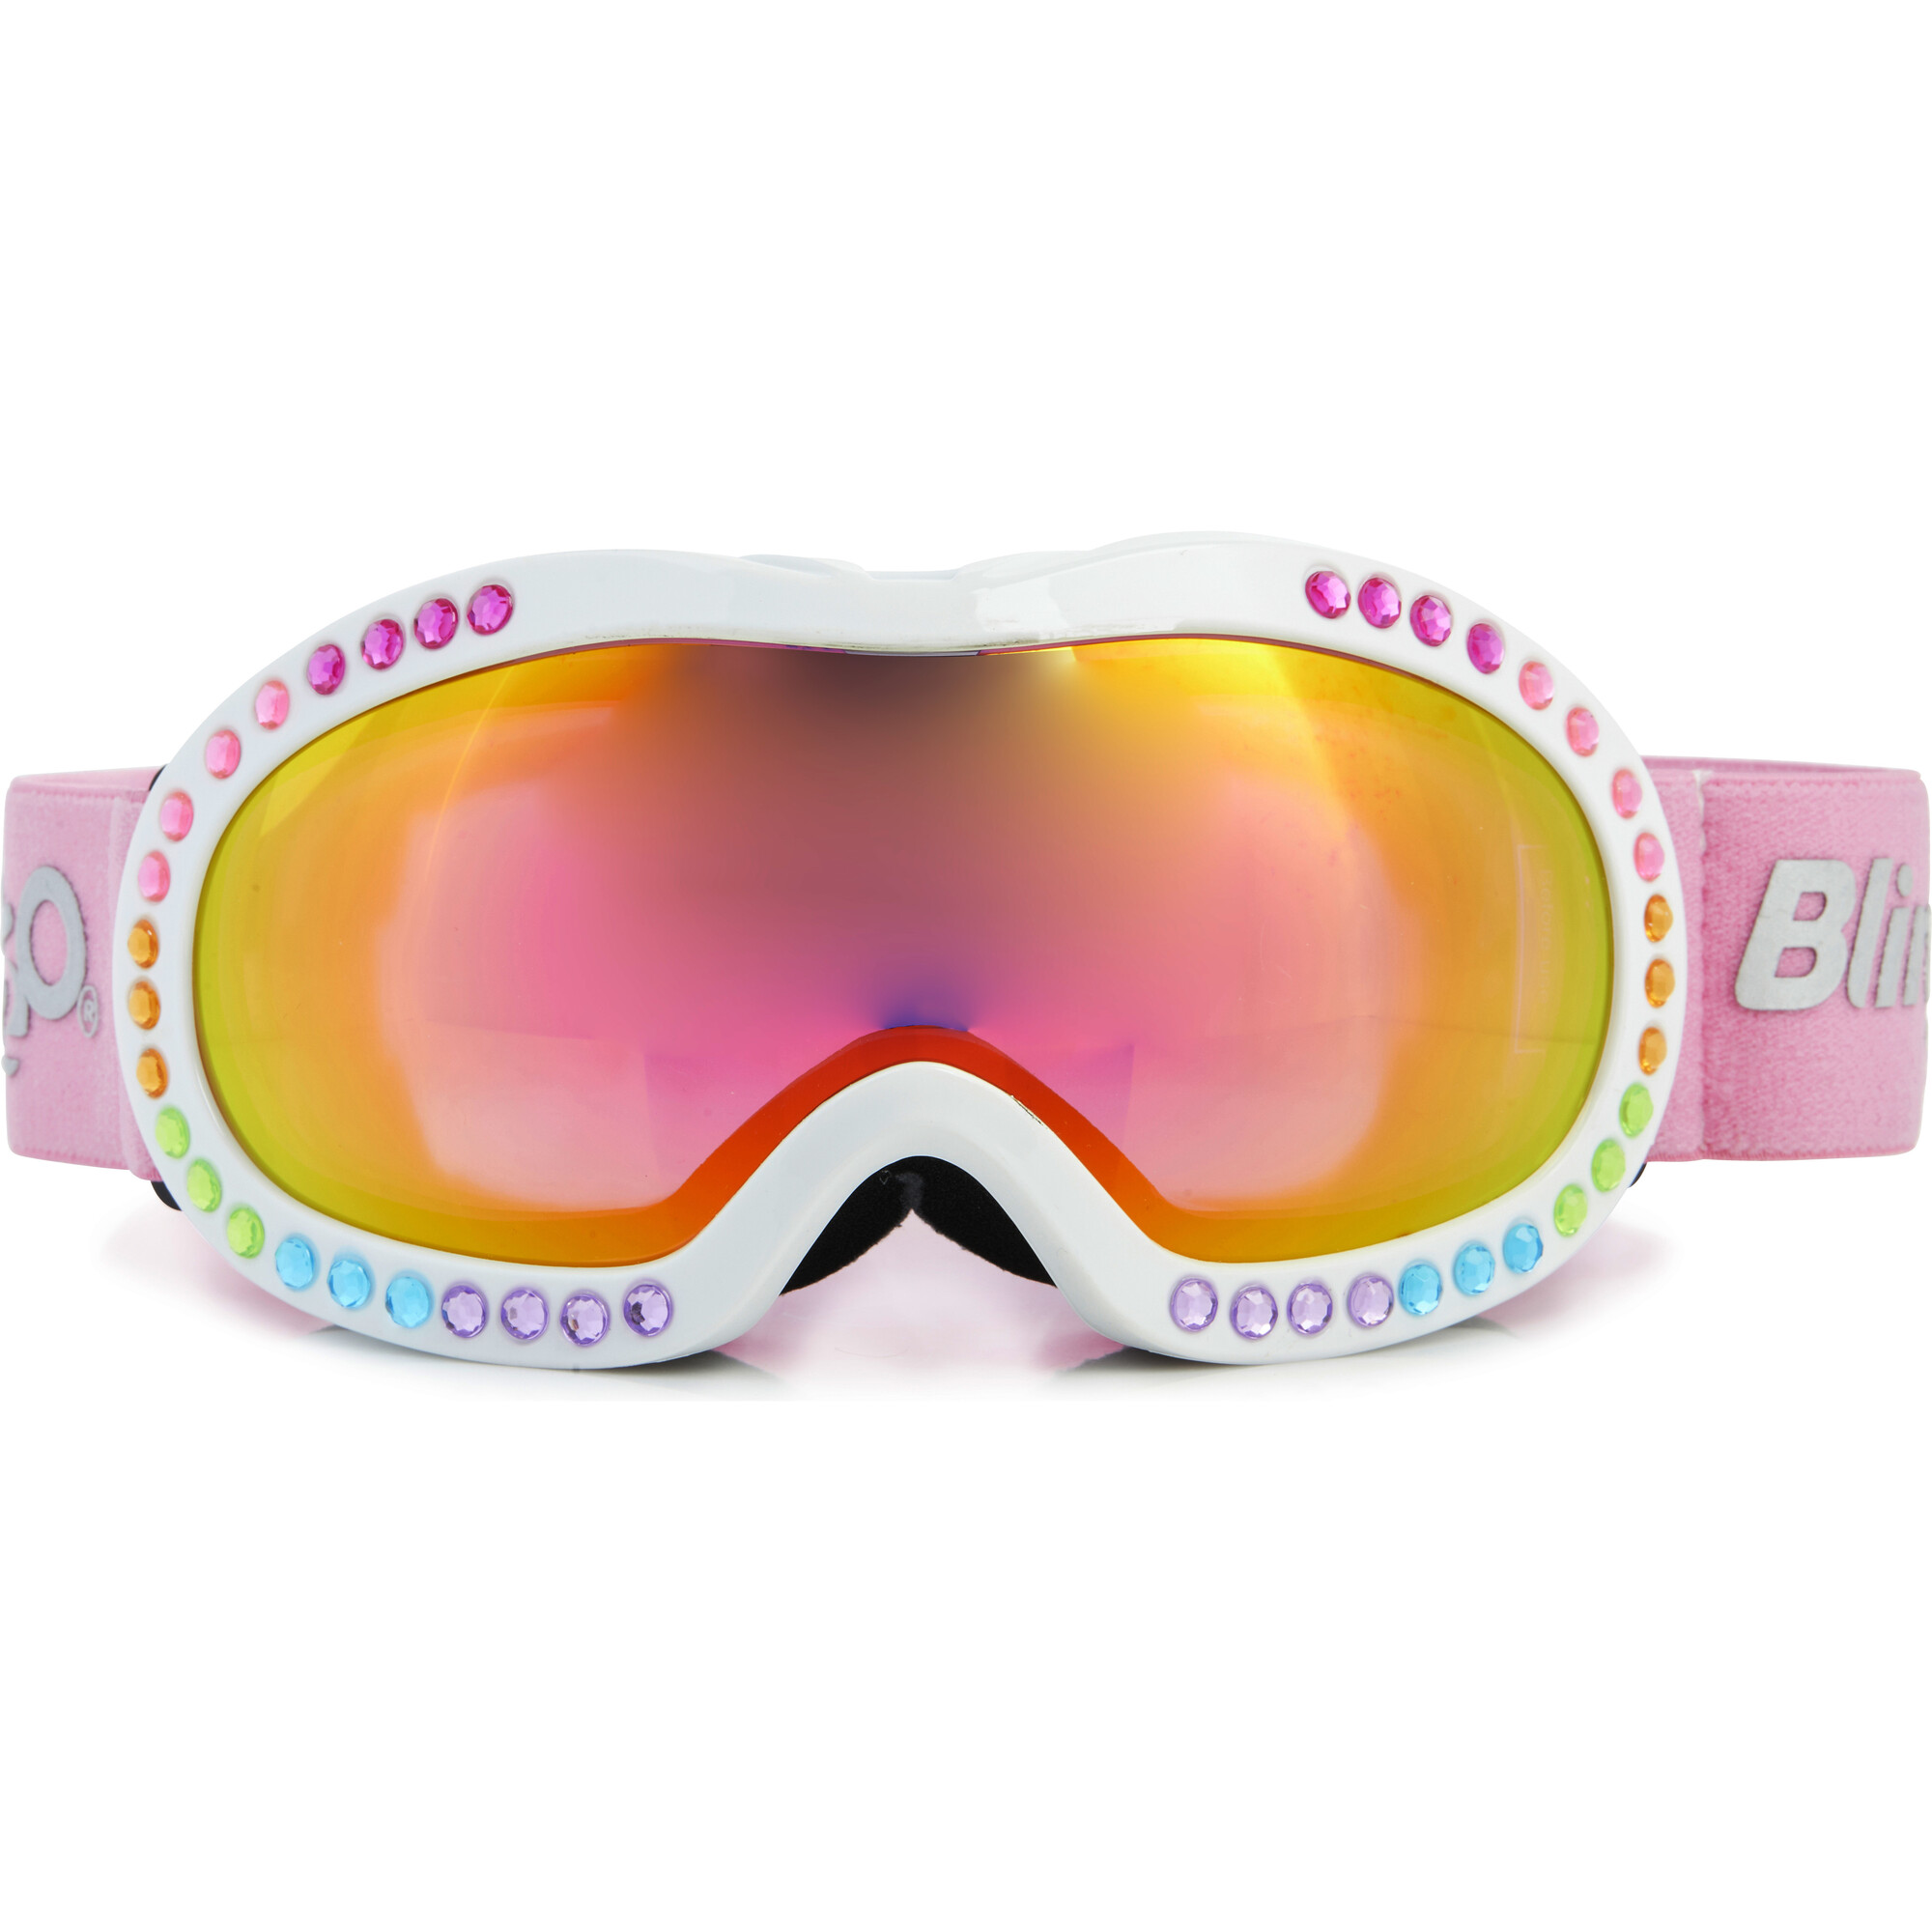 Men's Rhinestone Acetate Ski Goggles